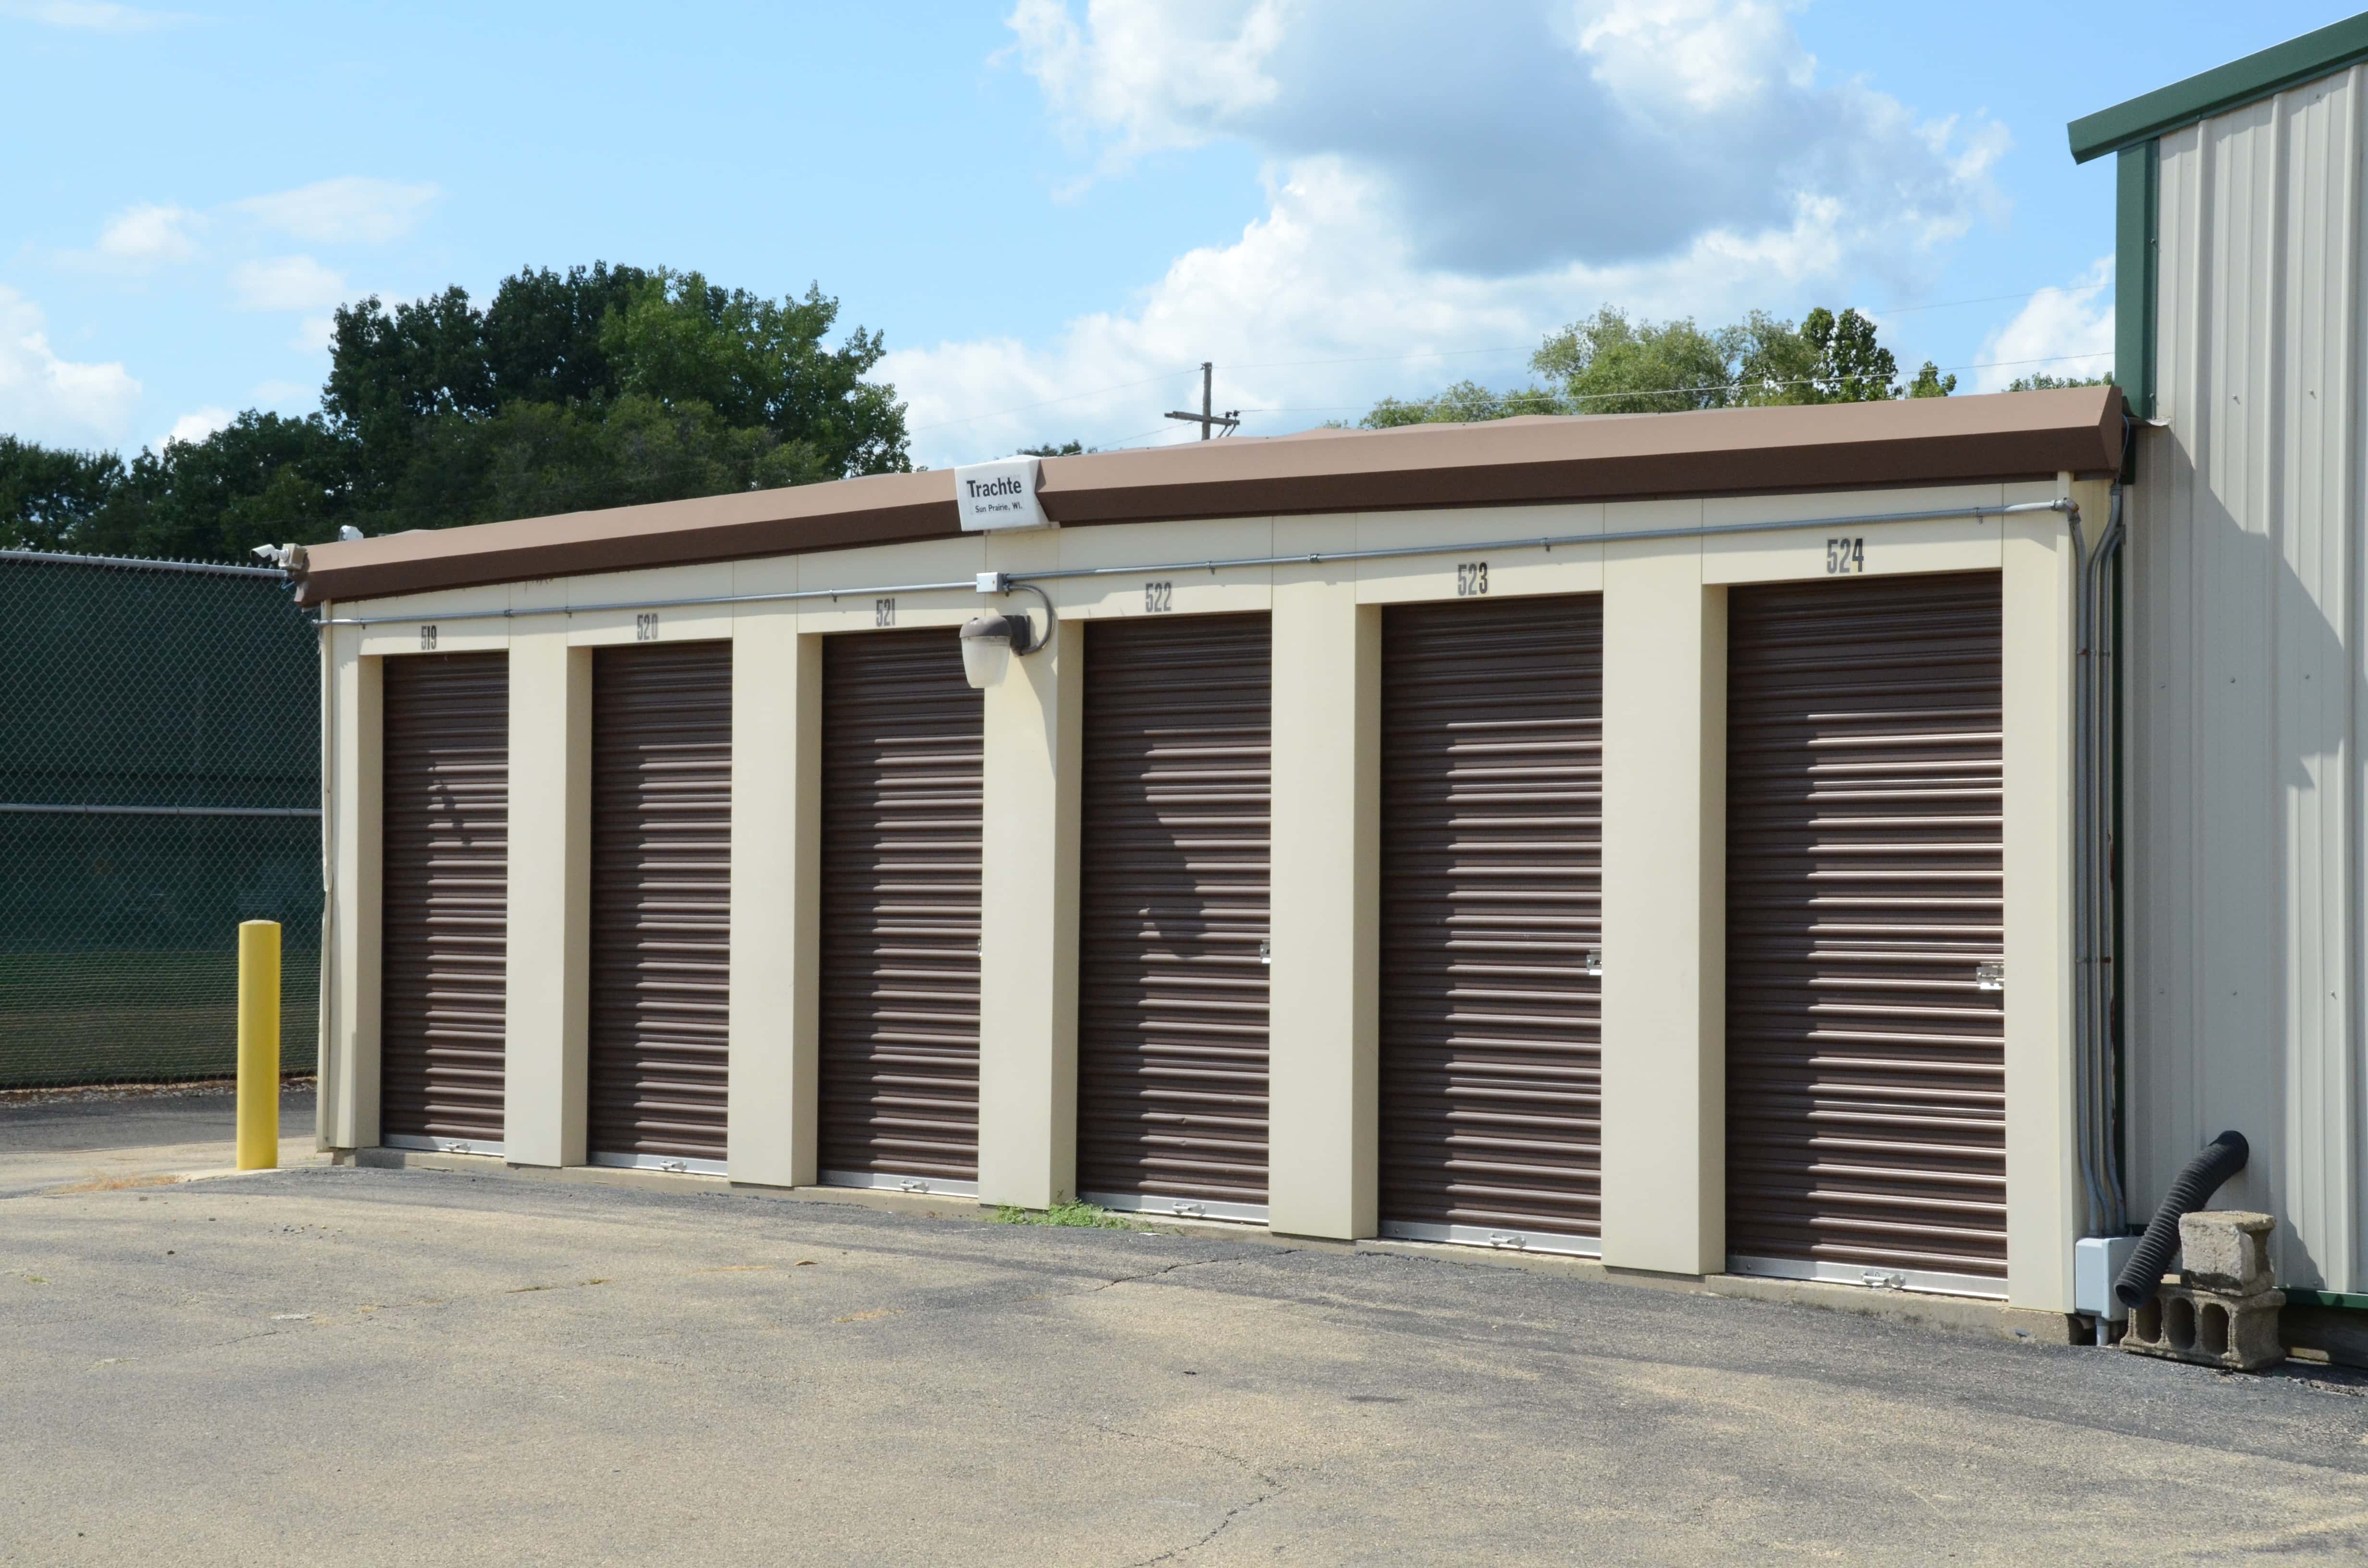 Koch Street Mini Storage - Pekin, IL, US, rental storage space